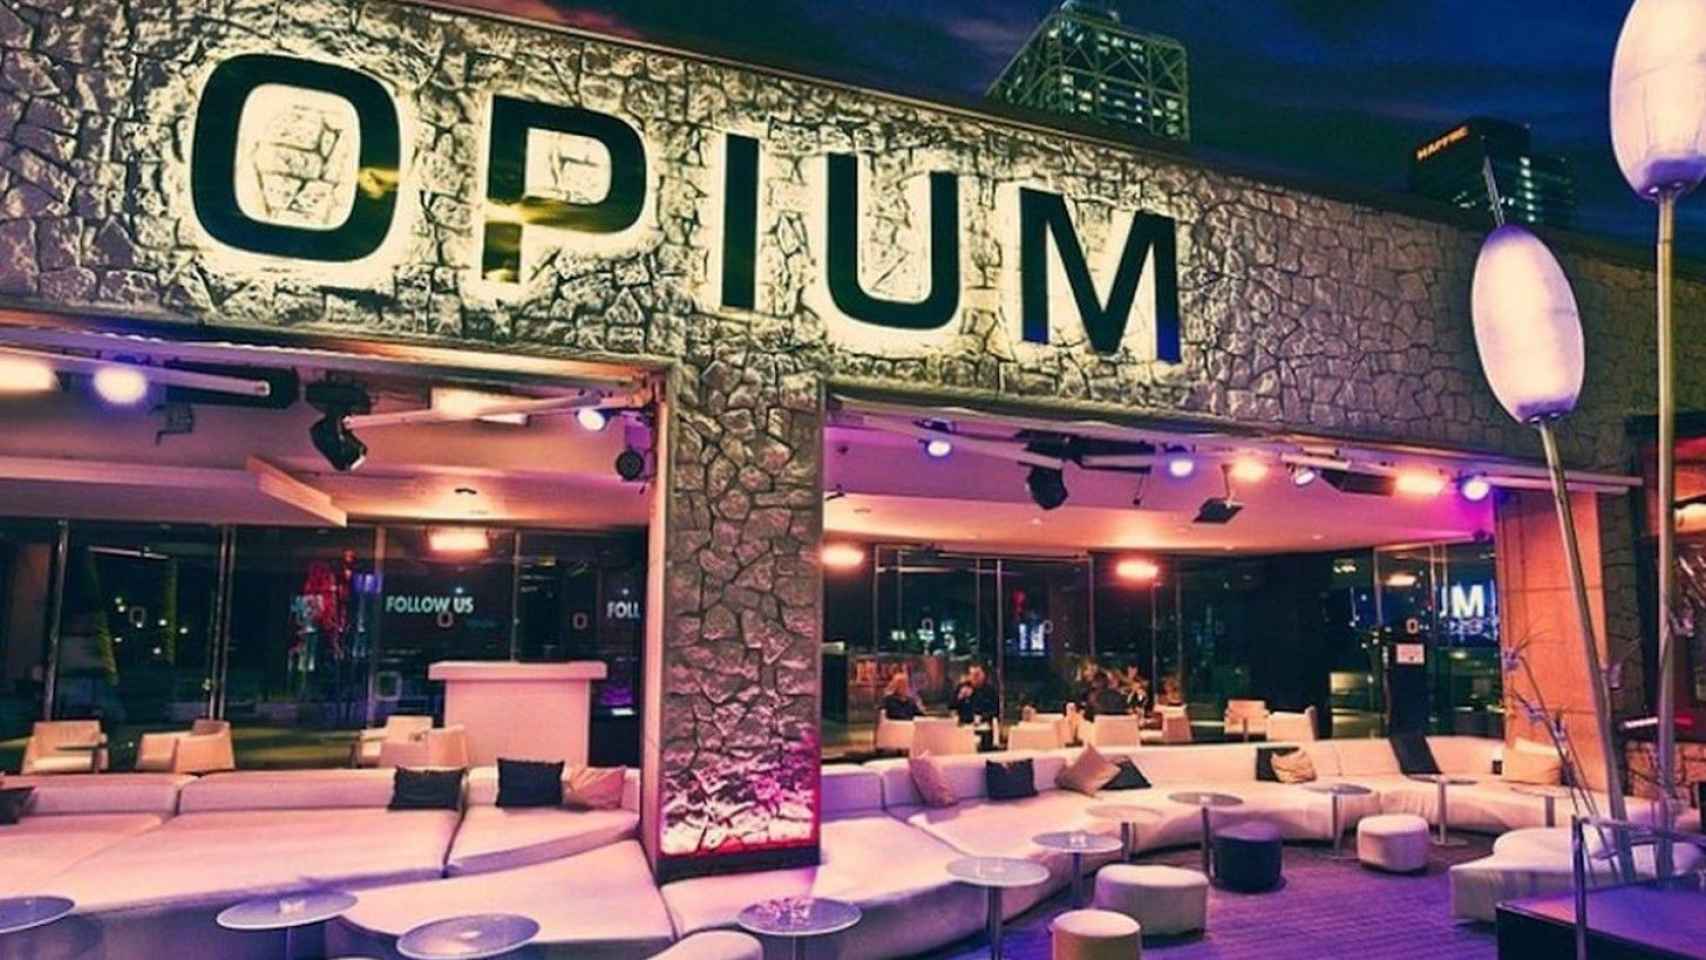 La discoteca Opium Barcelona, situada en el Port Olímpic / ARCHIVO